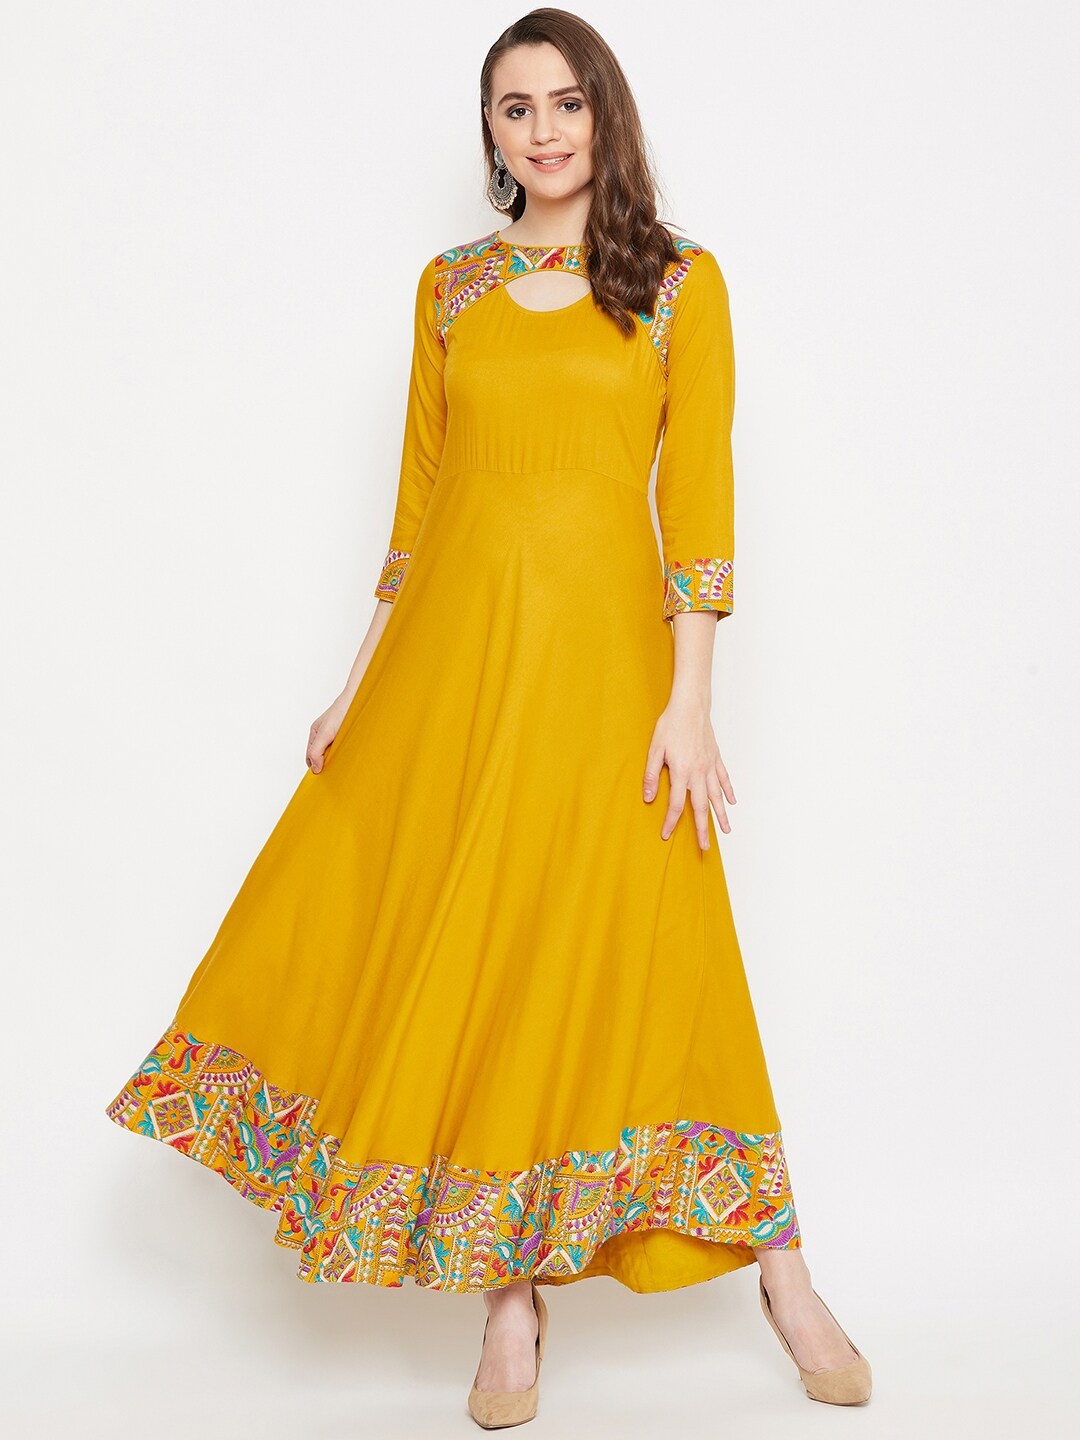 HELLO DESIGN Mustard Yellow Ethnic Anarkali Maxi Dress